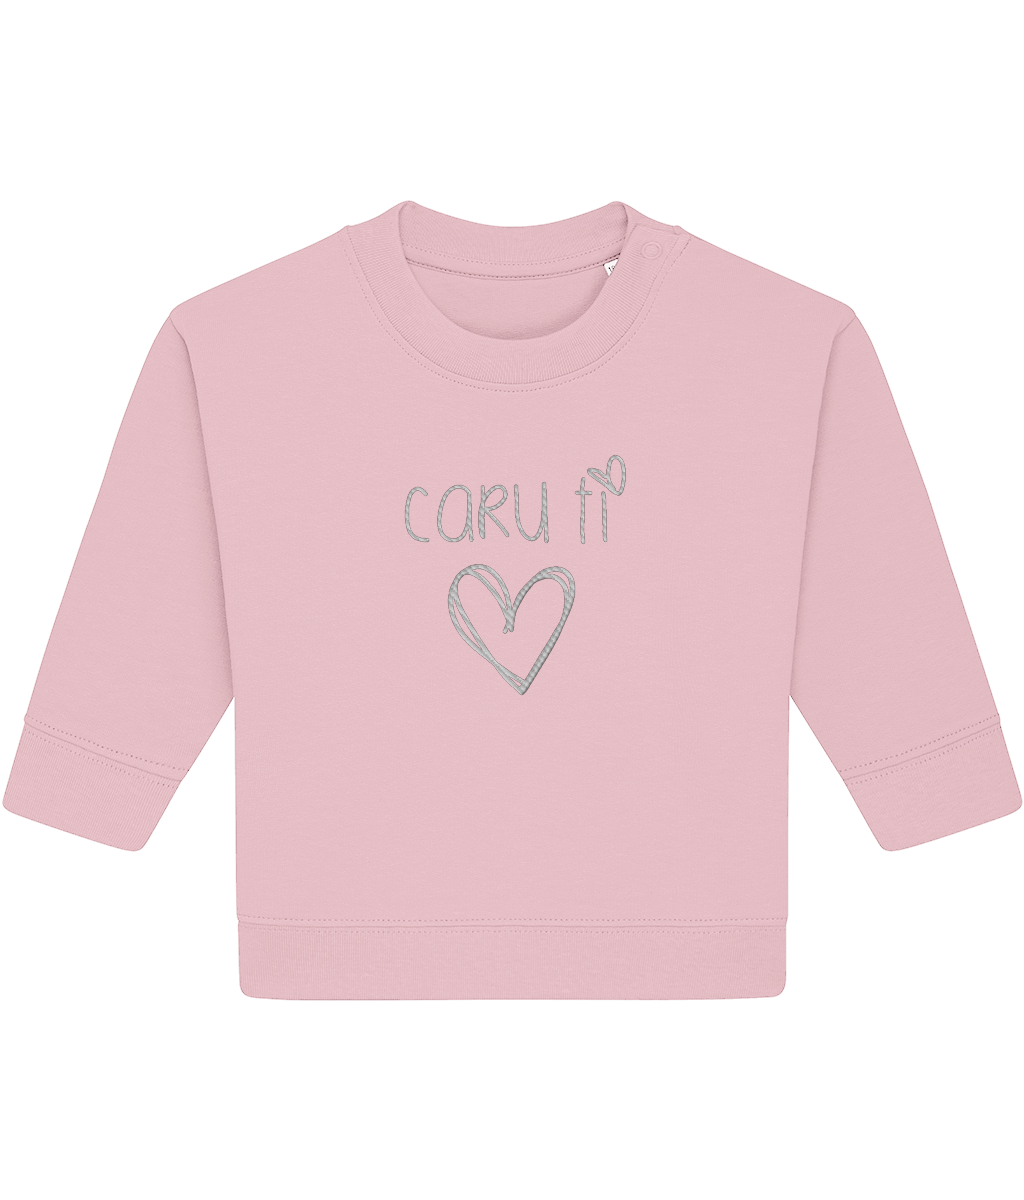 Caru ti Embroidered Sweatshirt | Welsh Children's Clothing